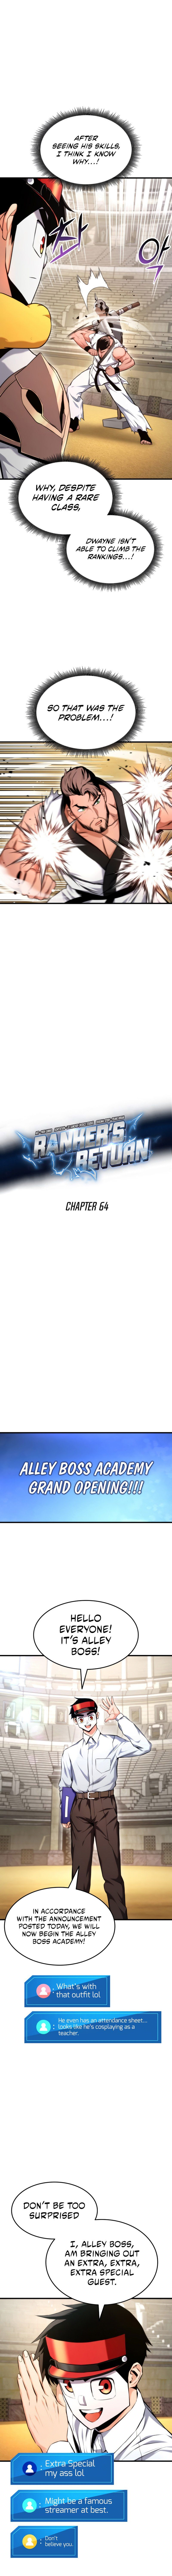 Ranker’s Return (Remake) Chapter 64 page 6